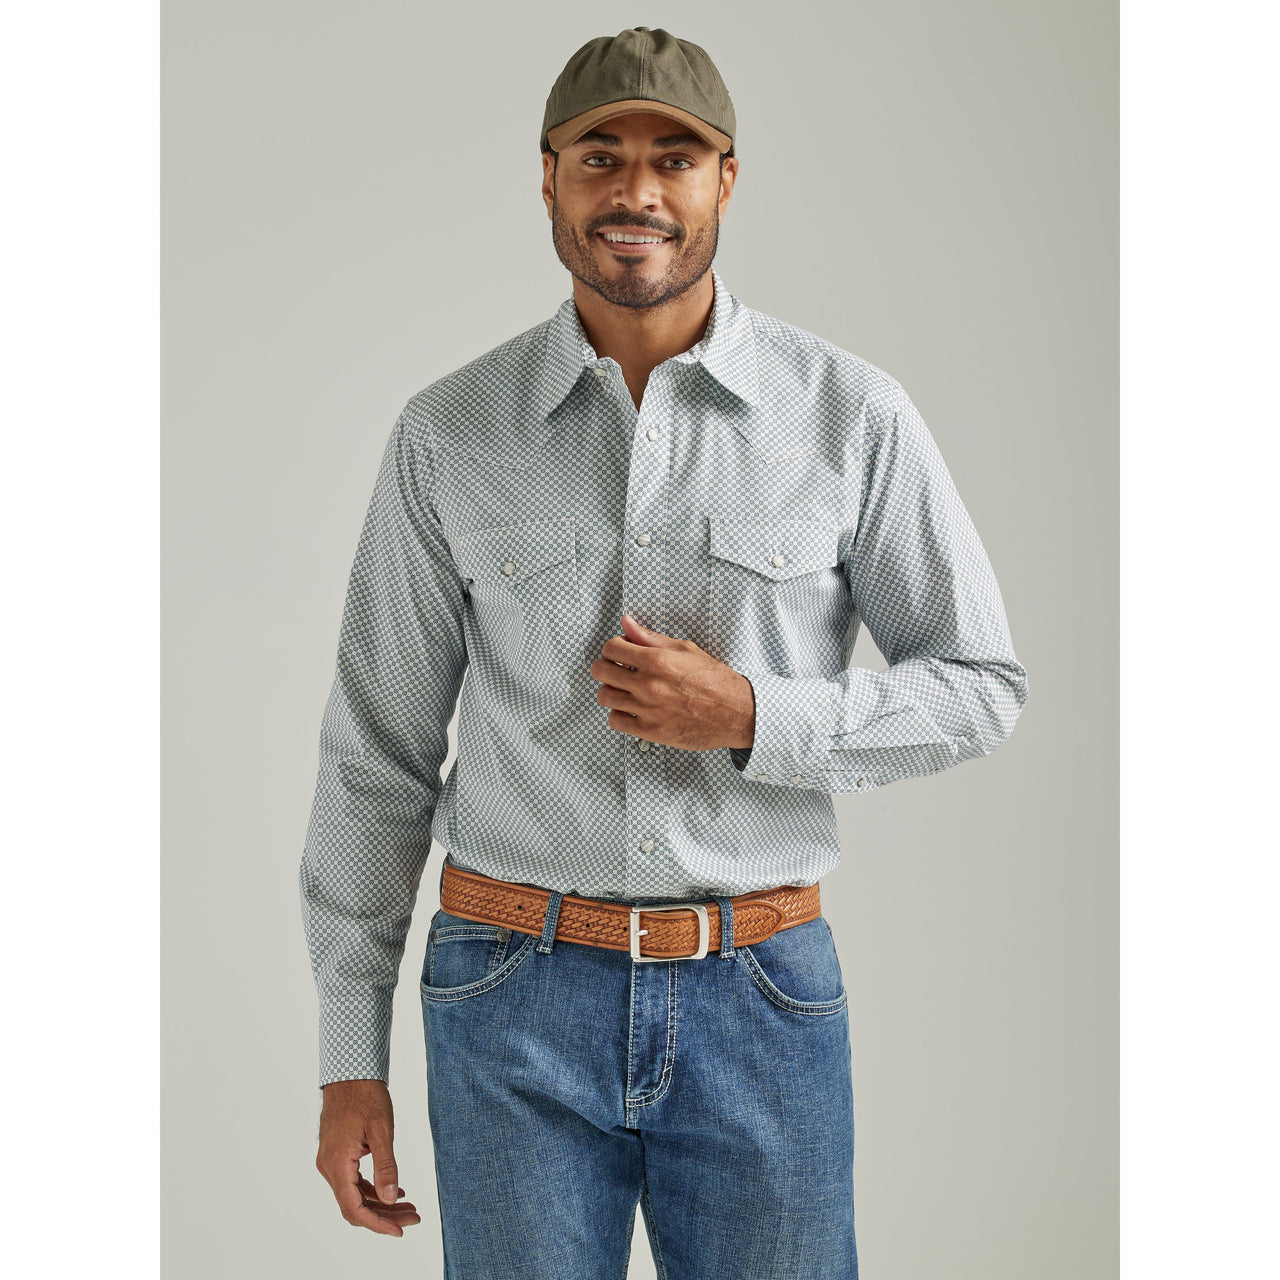 Wrangler Men's 20X Advanced Comfort Long Sleeve Shirt - Teal